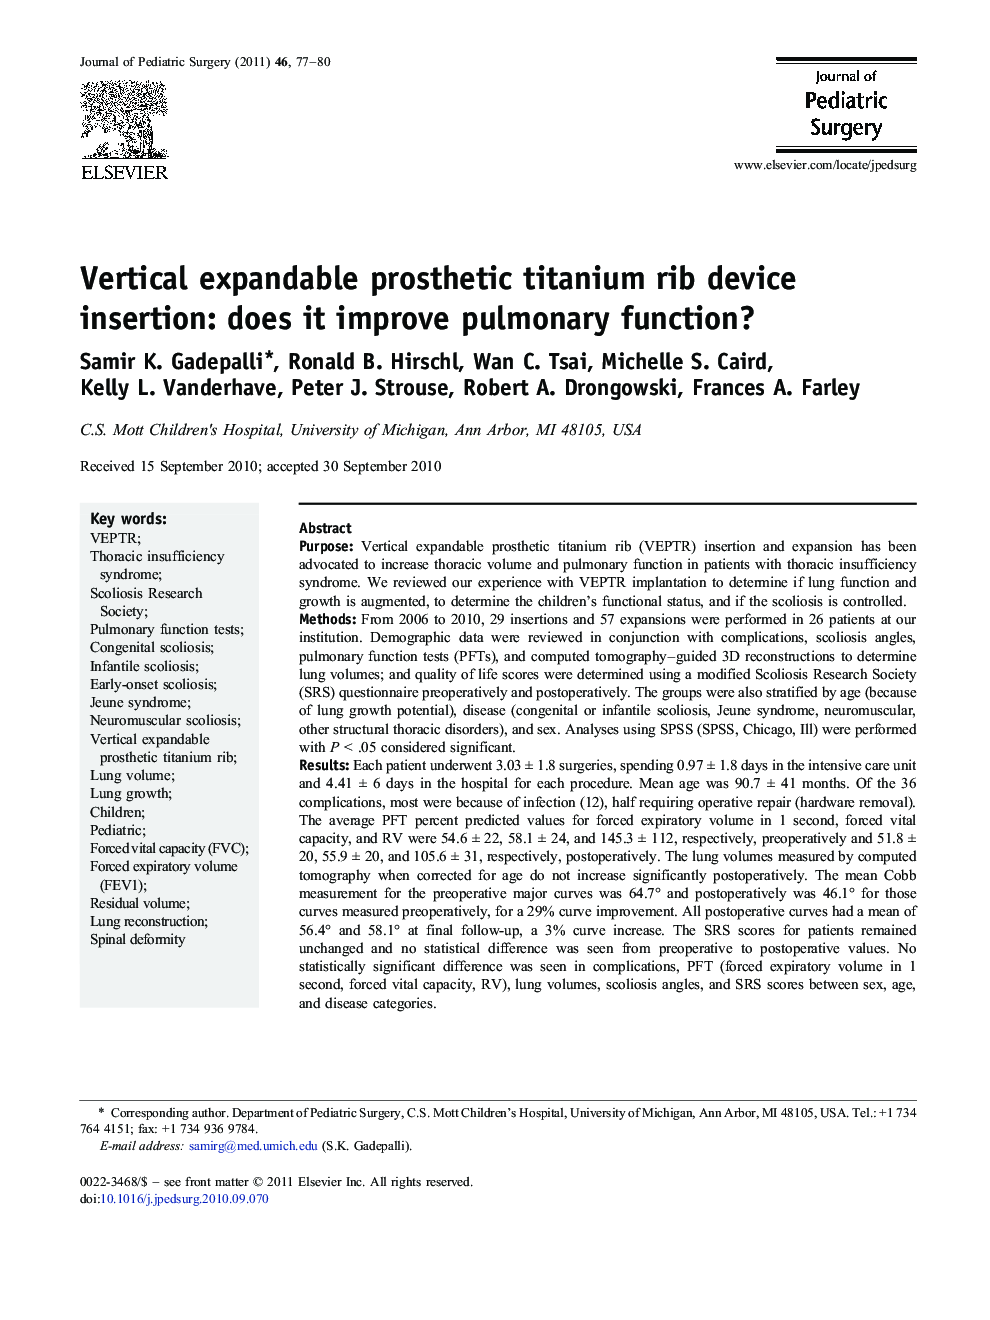 Vertical expandable prosthetic titanium rib device insertion: does it improve pulmonary function?